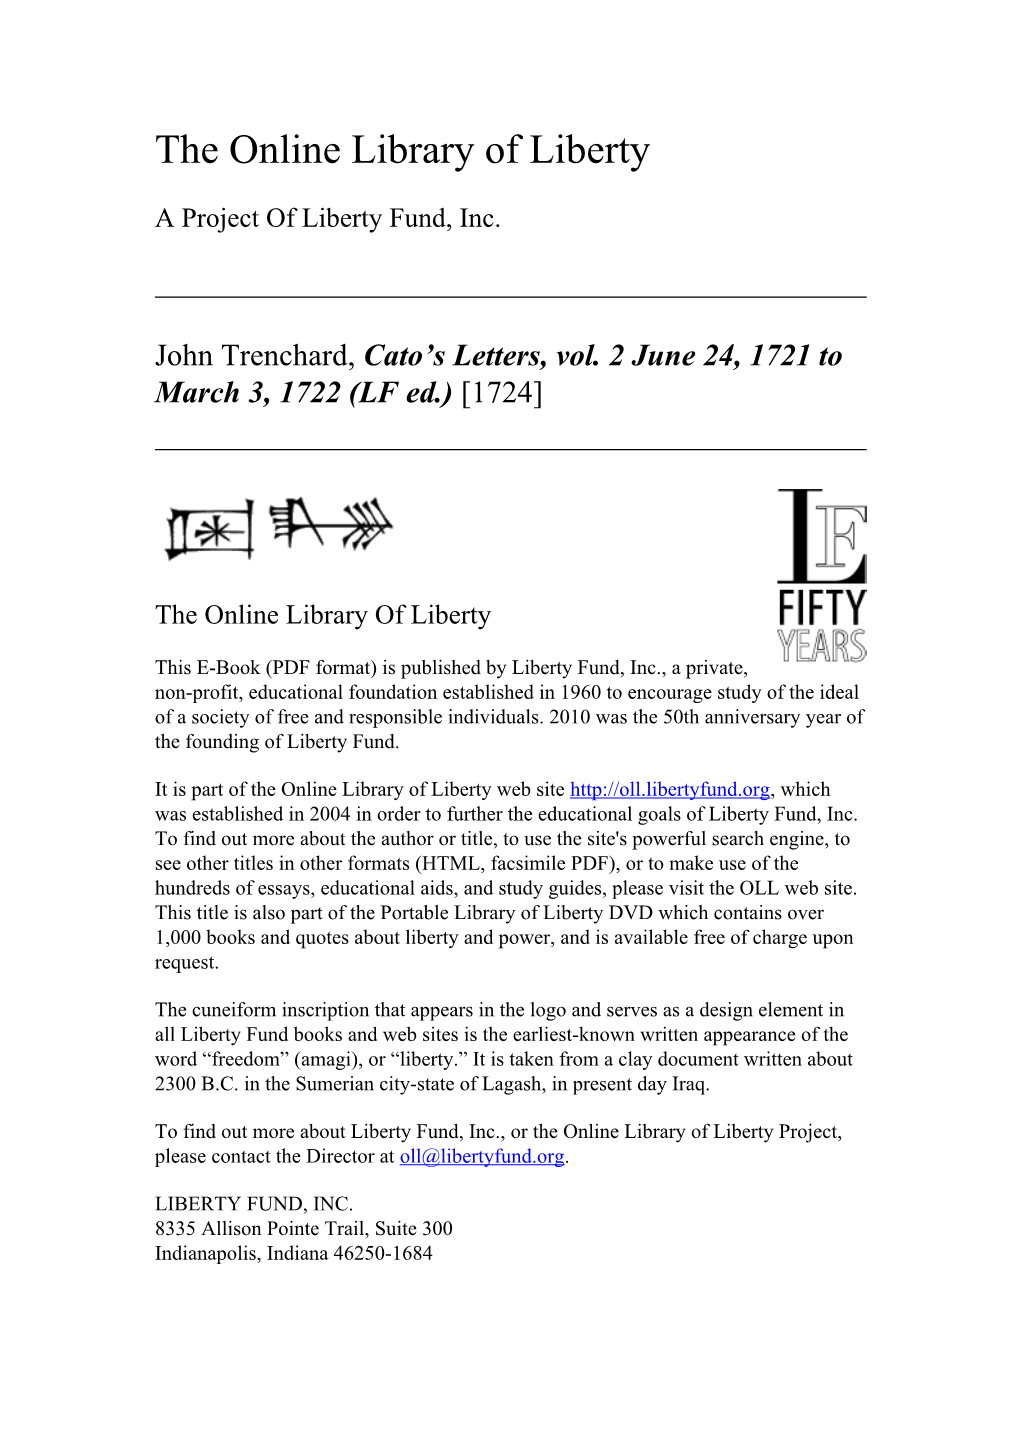 Cato's Letters, Vol. 2 June 24, 1721 to March 3, 1722 (LF Ed.)